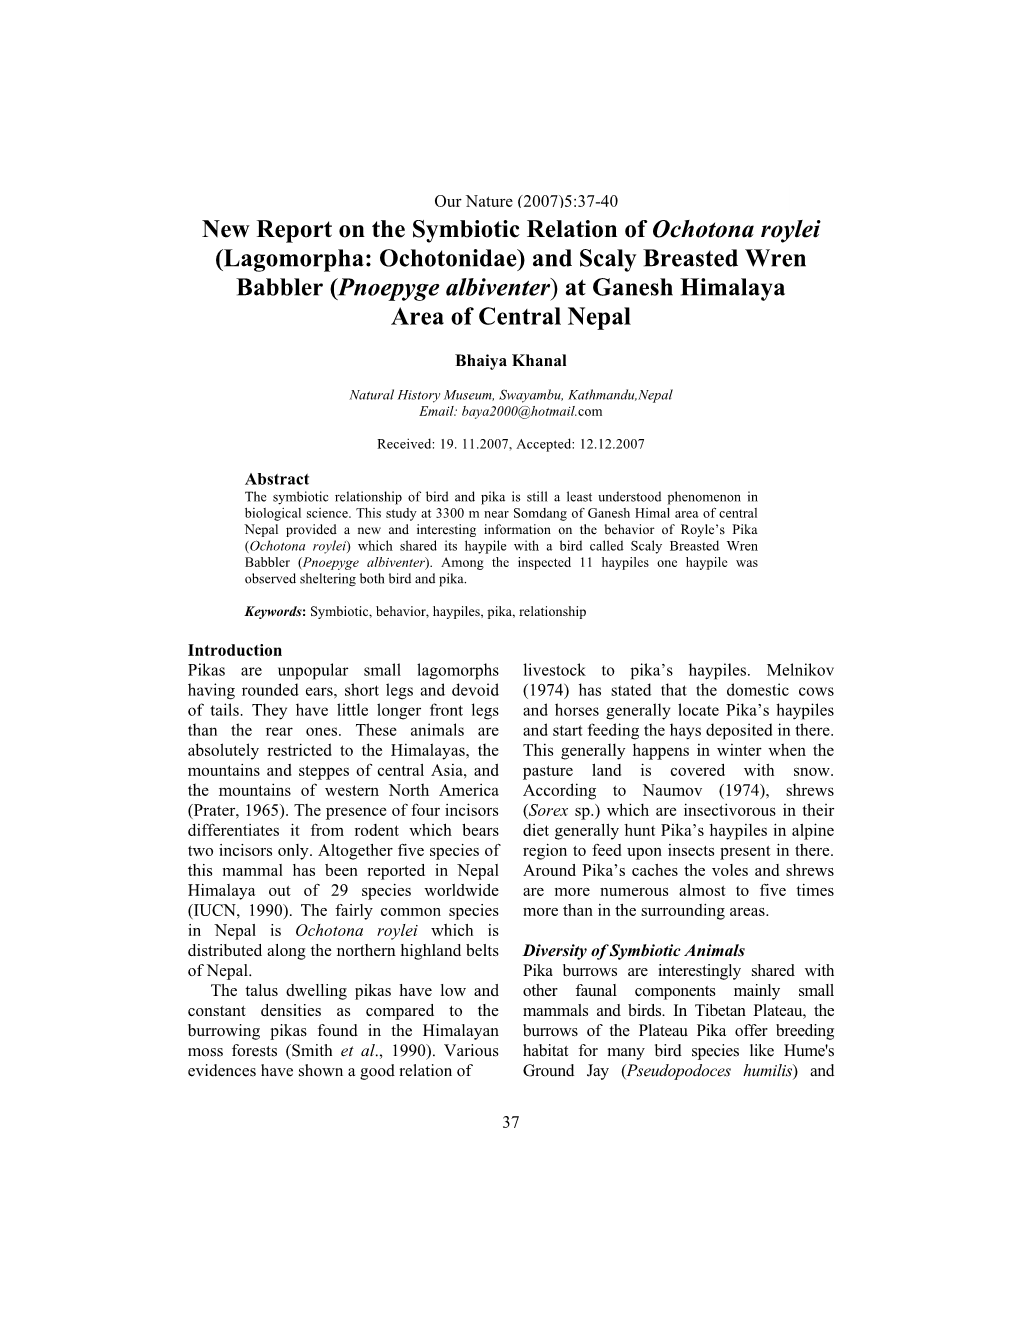 New Report on the Symbiotic Relation of Ochotona Roylei (Lagomorpha